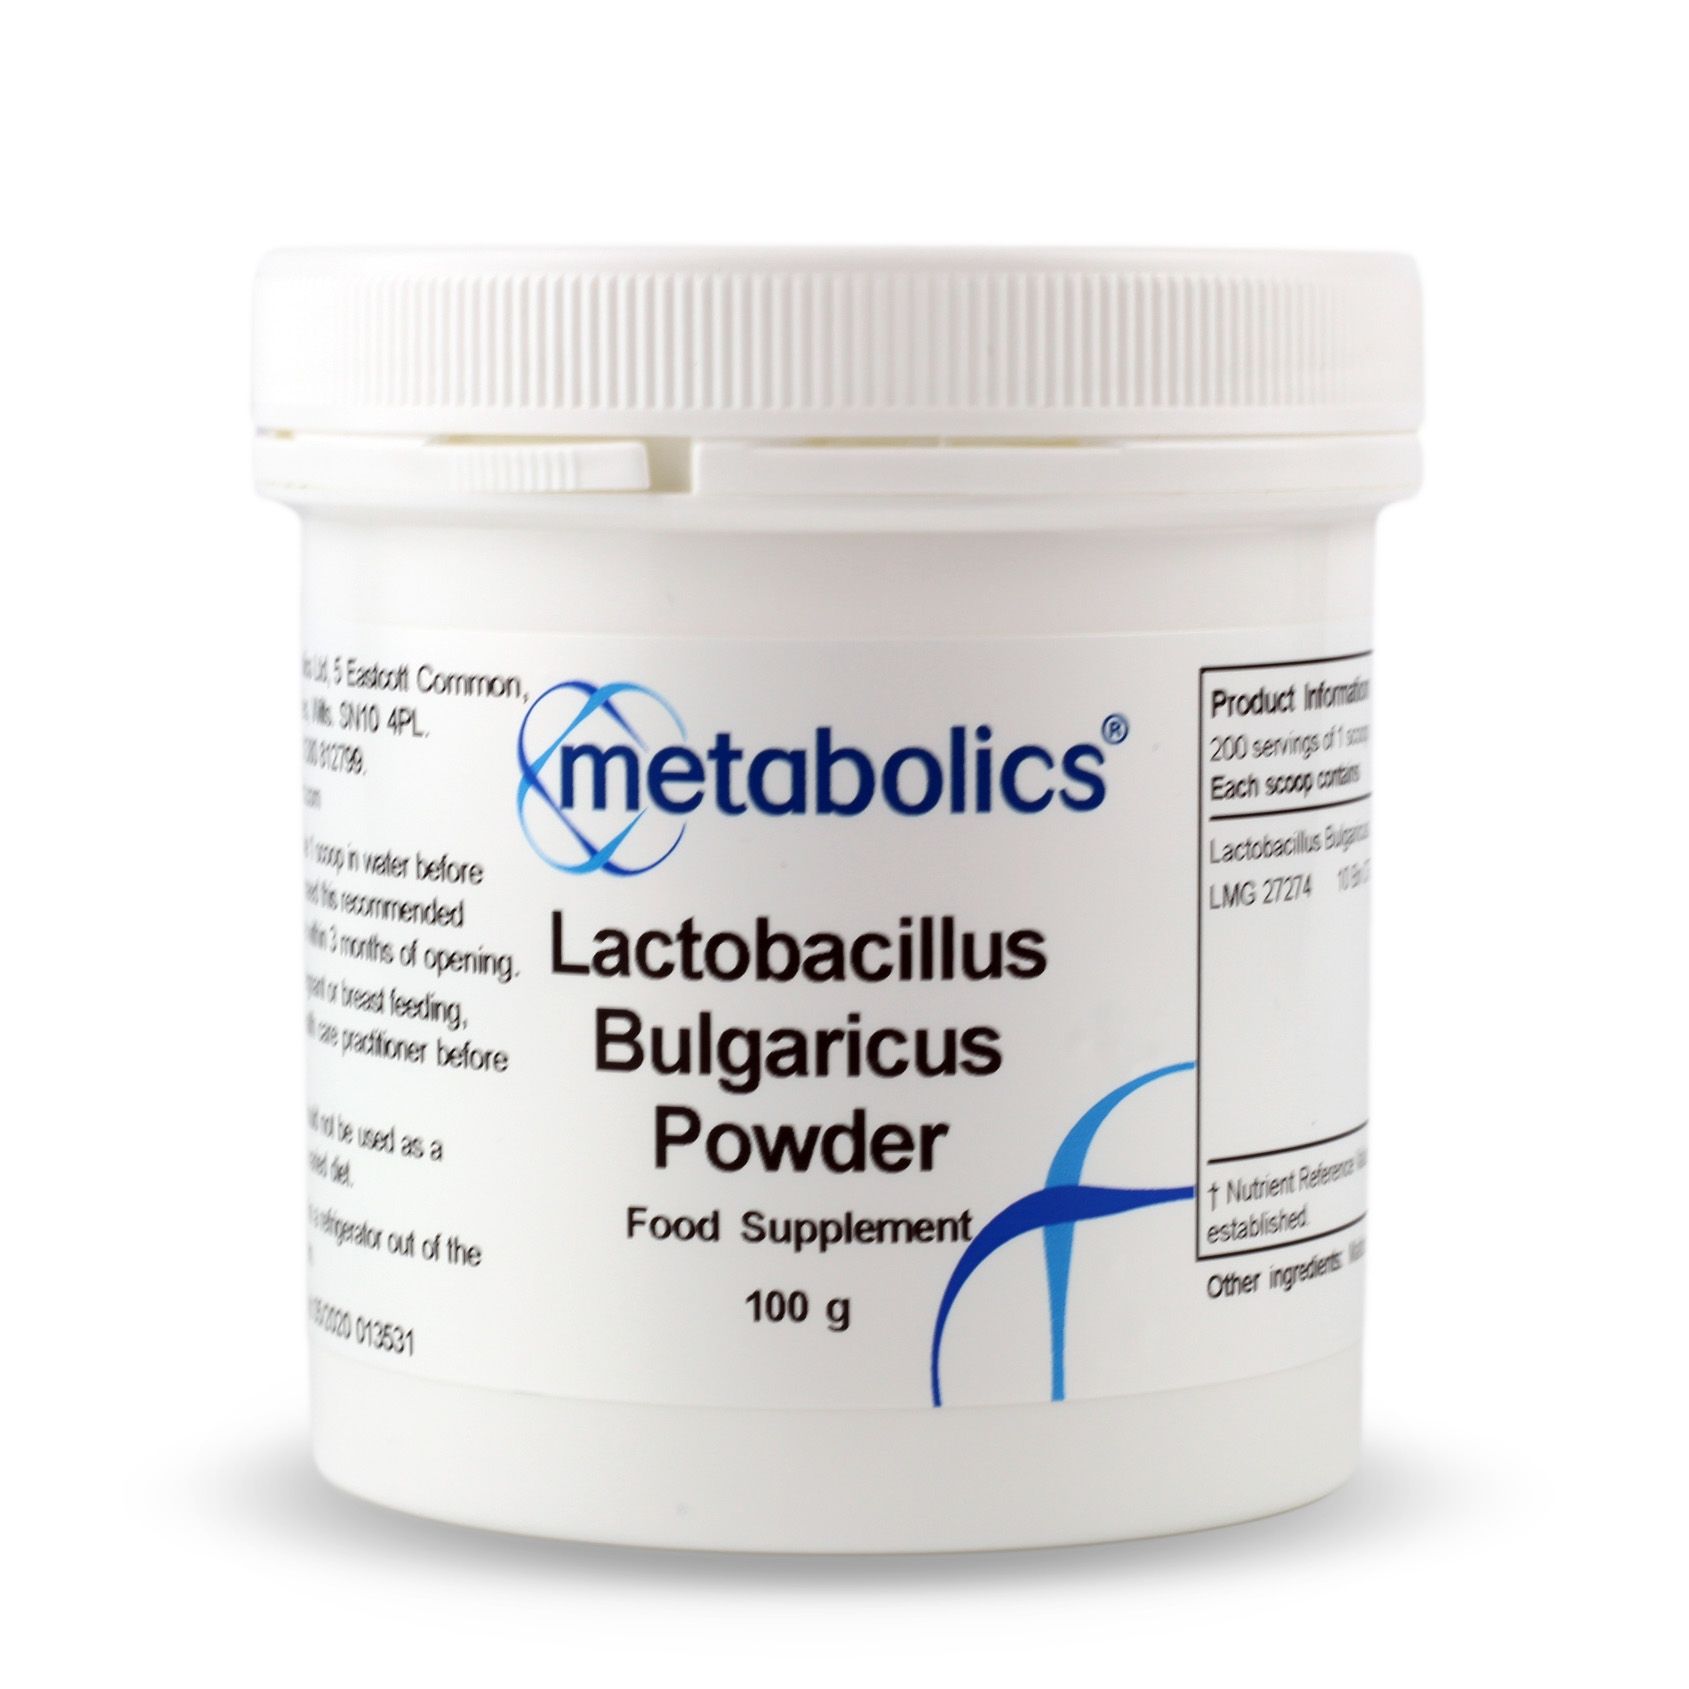 Lactobacillus Bulgaricus Powder (Pot of 100g)